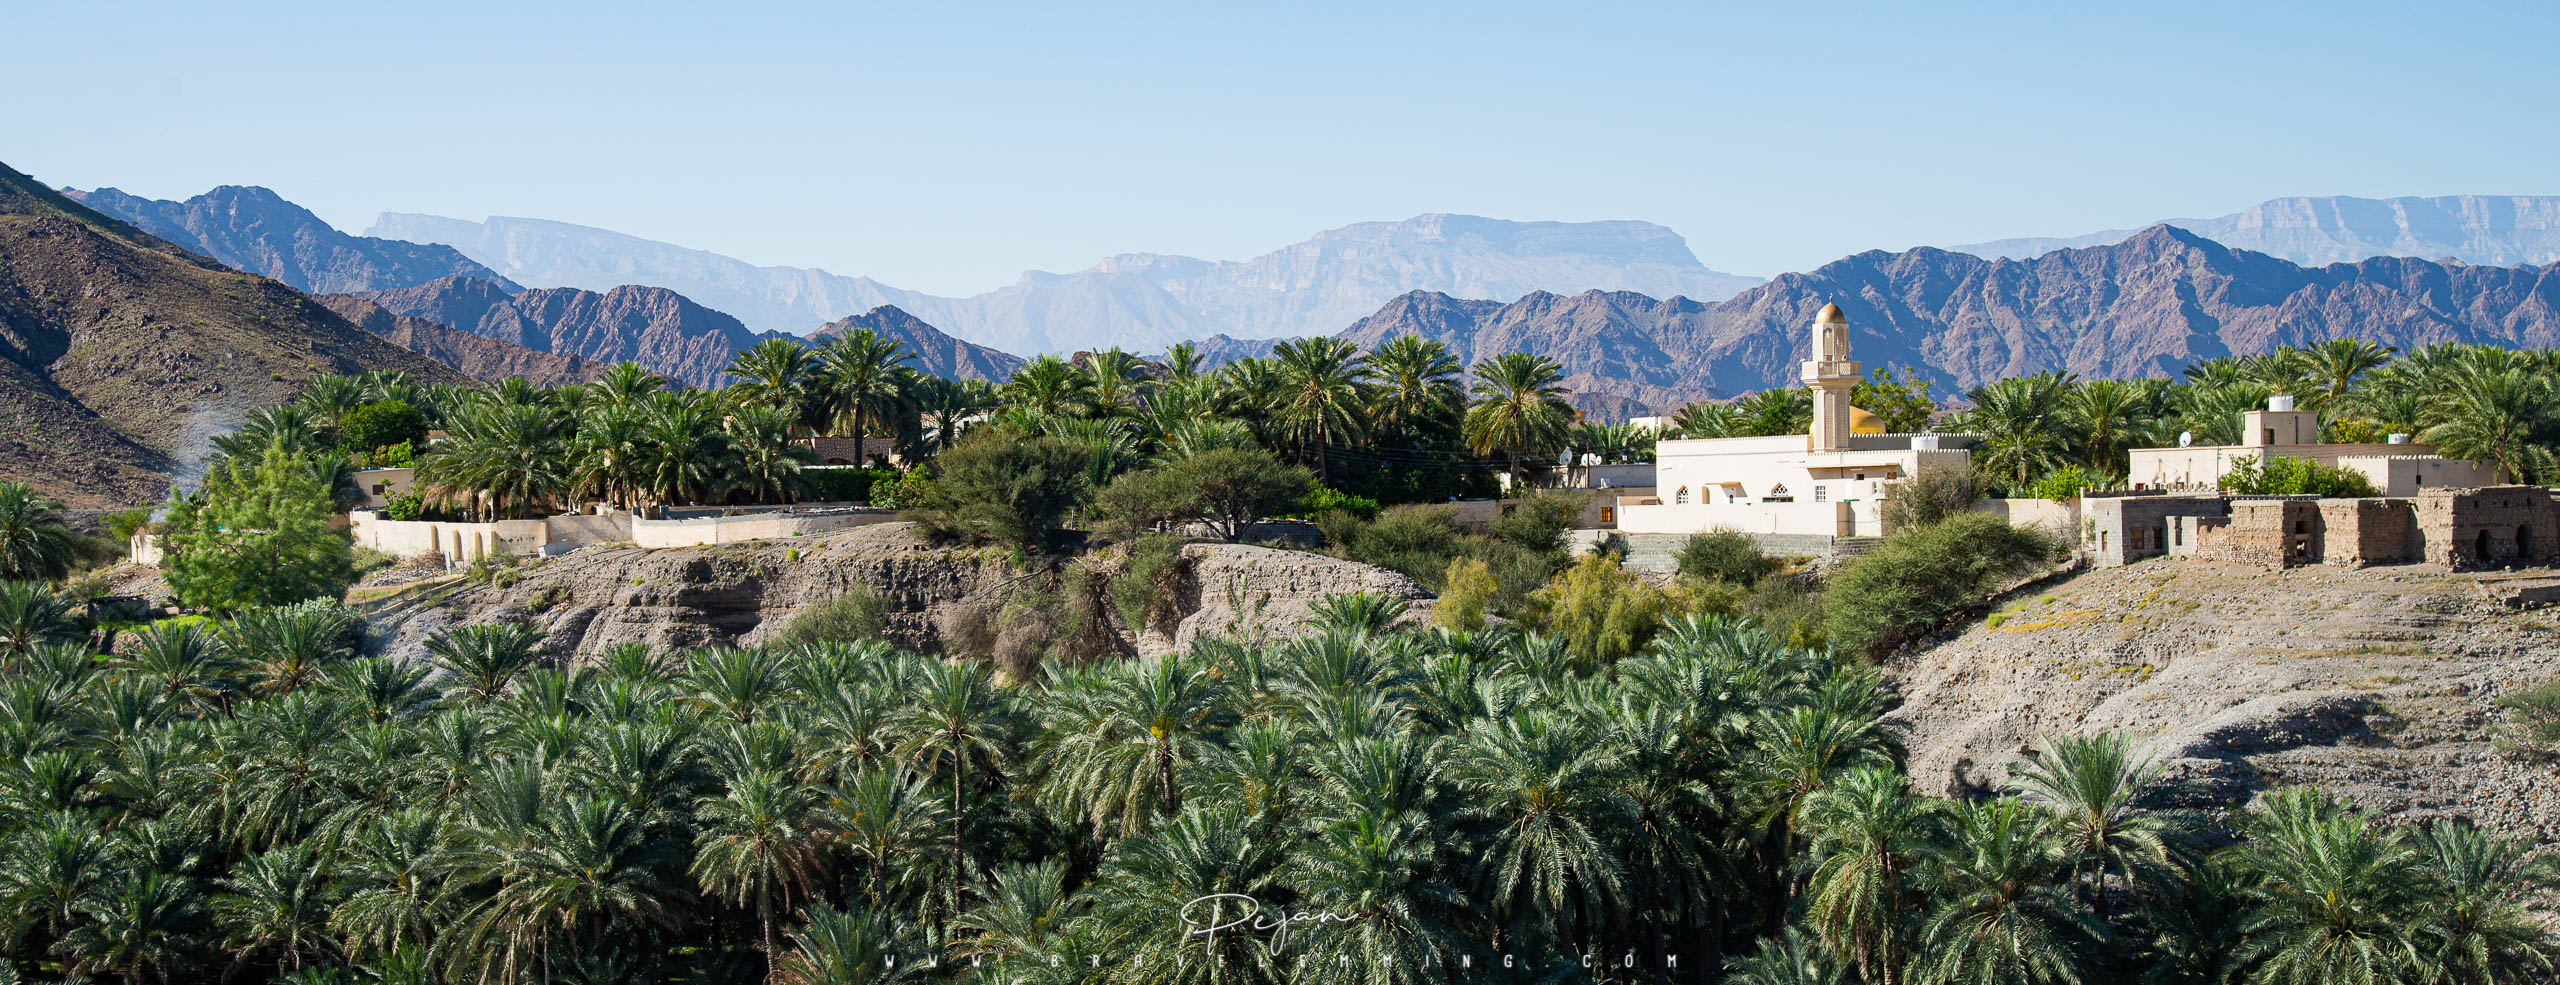 Oasis de Wadi Hawquain, Sultanat d'Oman